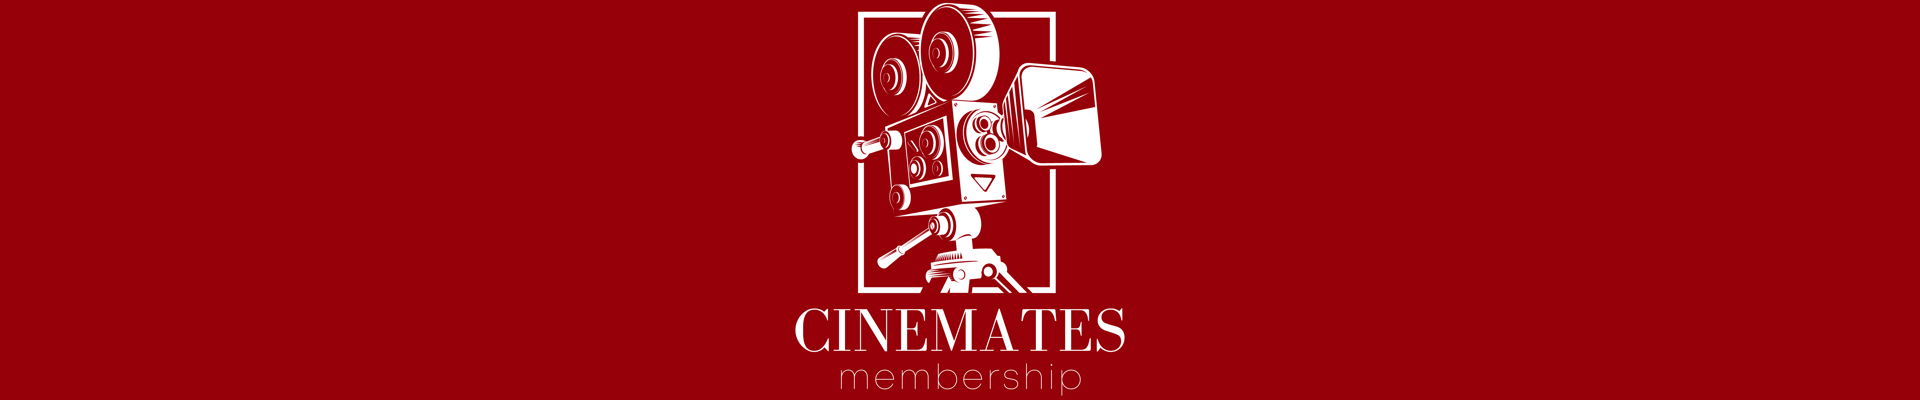 Cinemates Logo